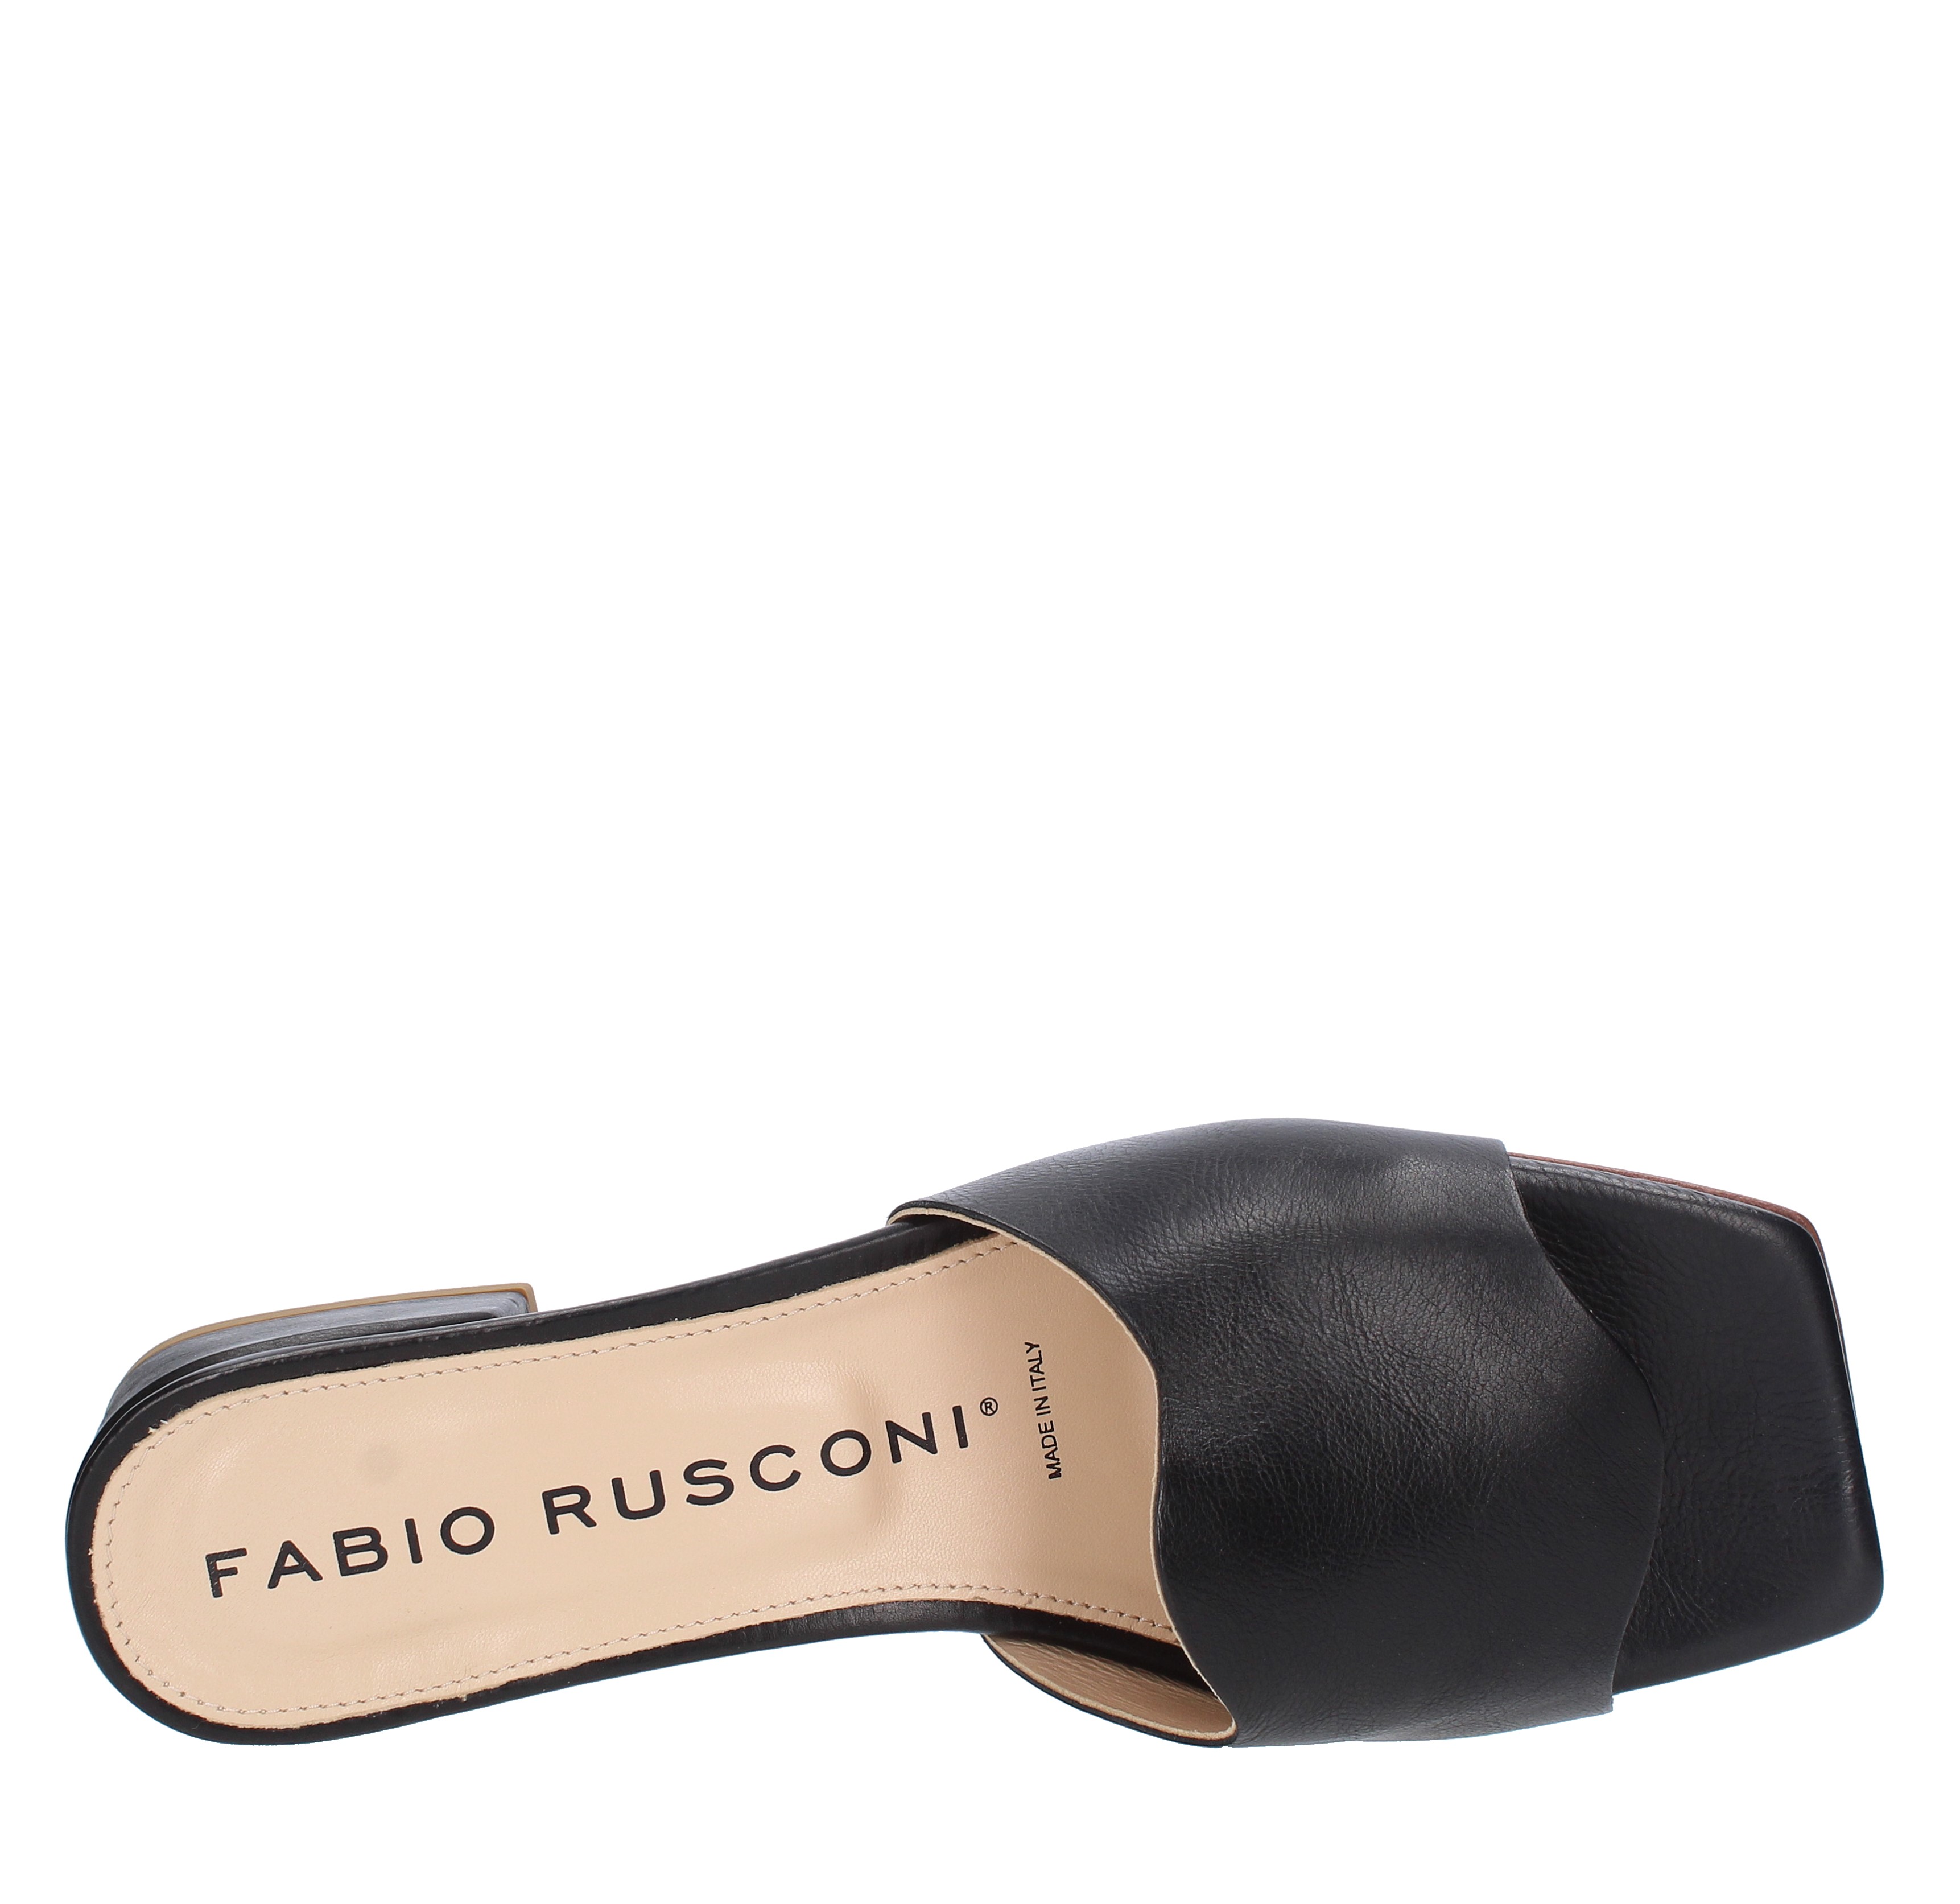 FABIO RUSCONI - Ginevra calzature